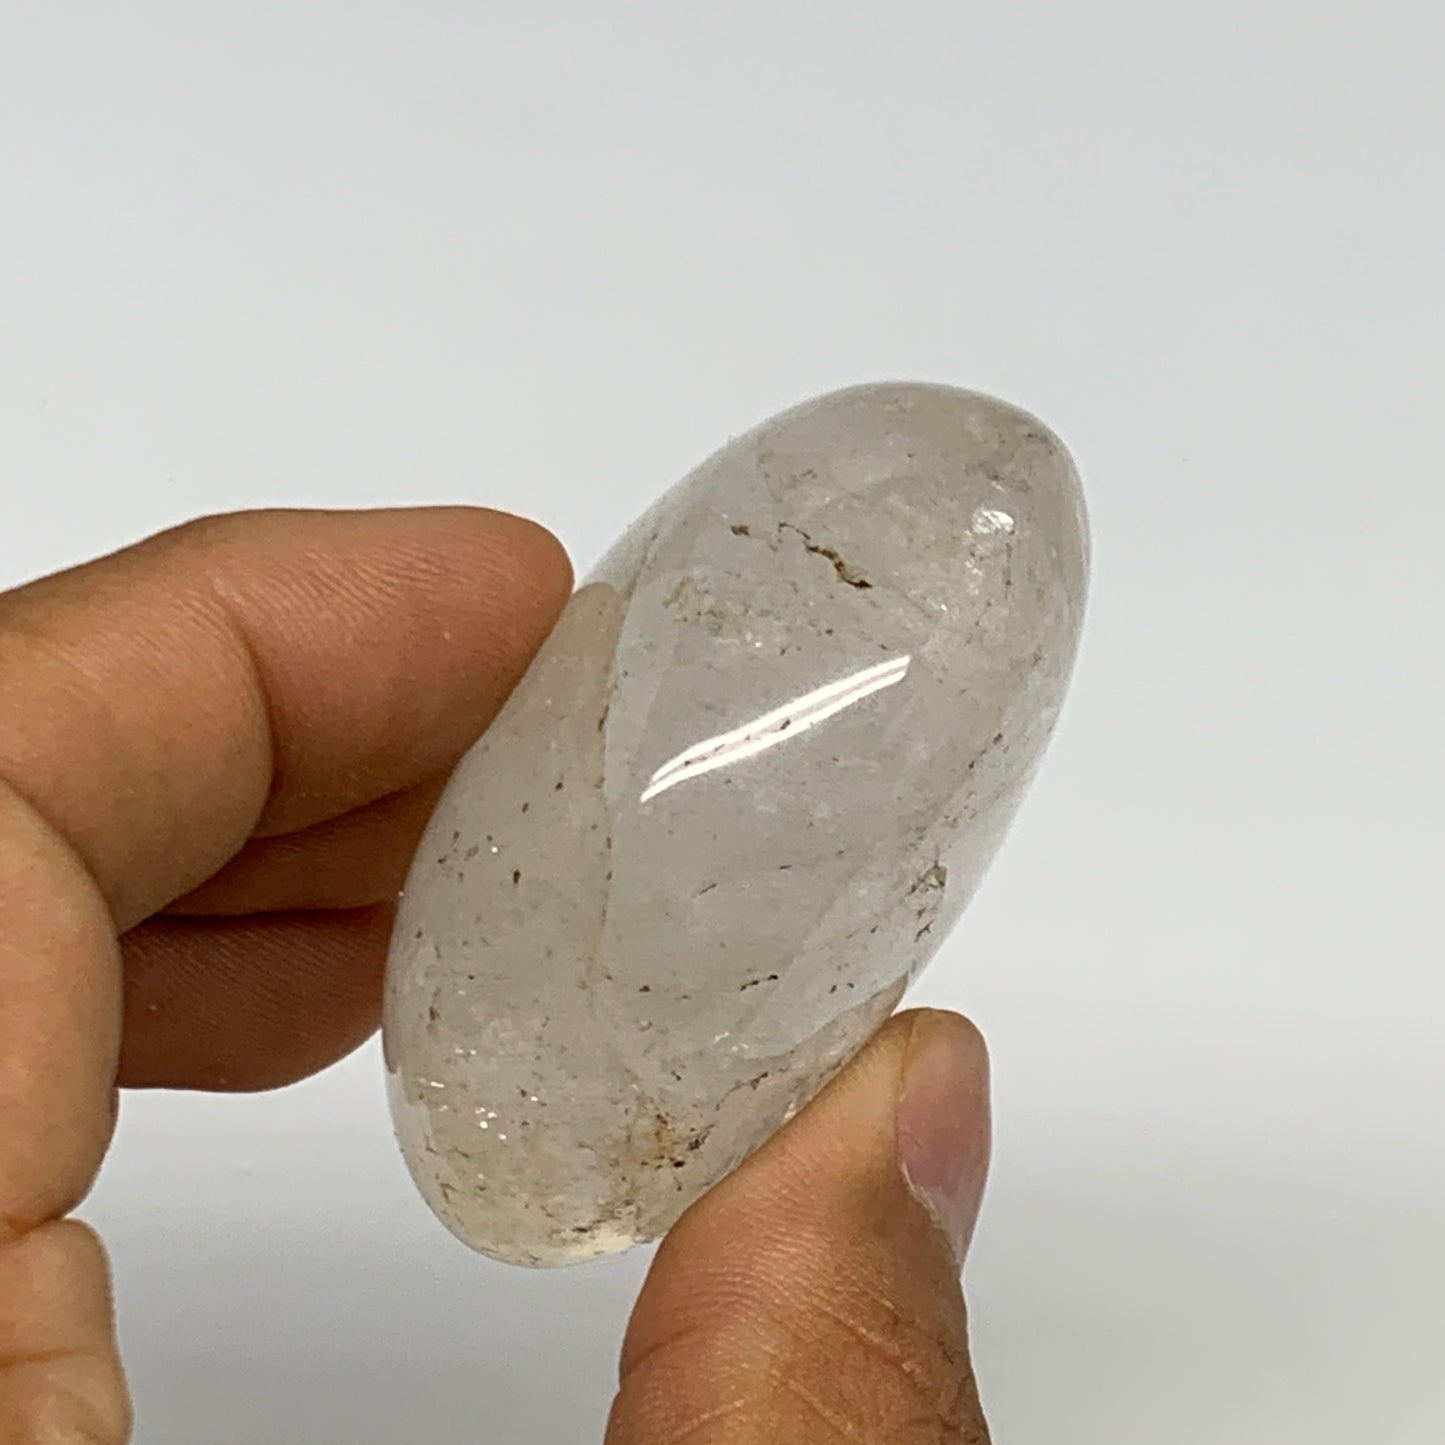 90.5g, 2.1"x1.8"x1.1", Natural Quartz Crystal Palm-Stone Polished Reiki, B29008